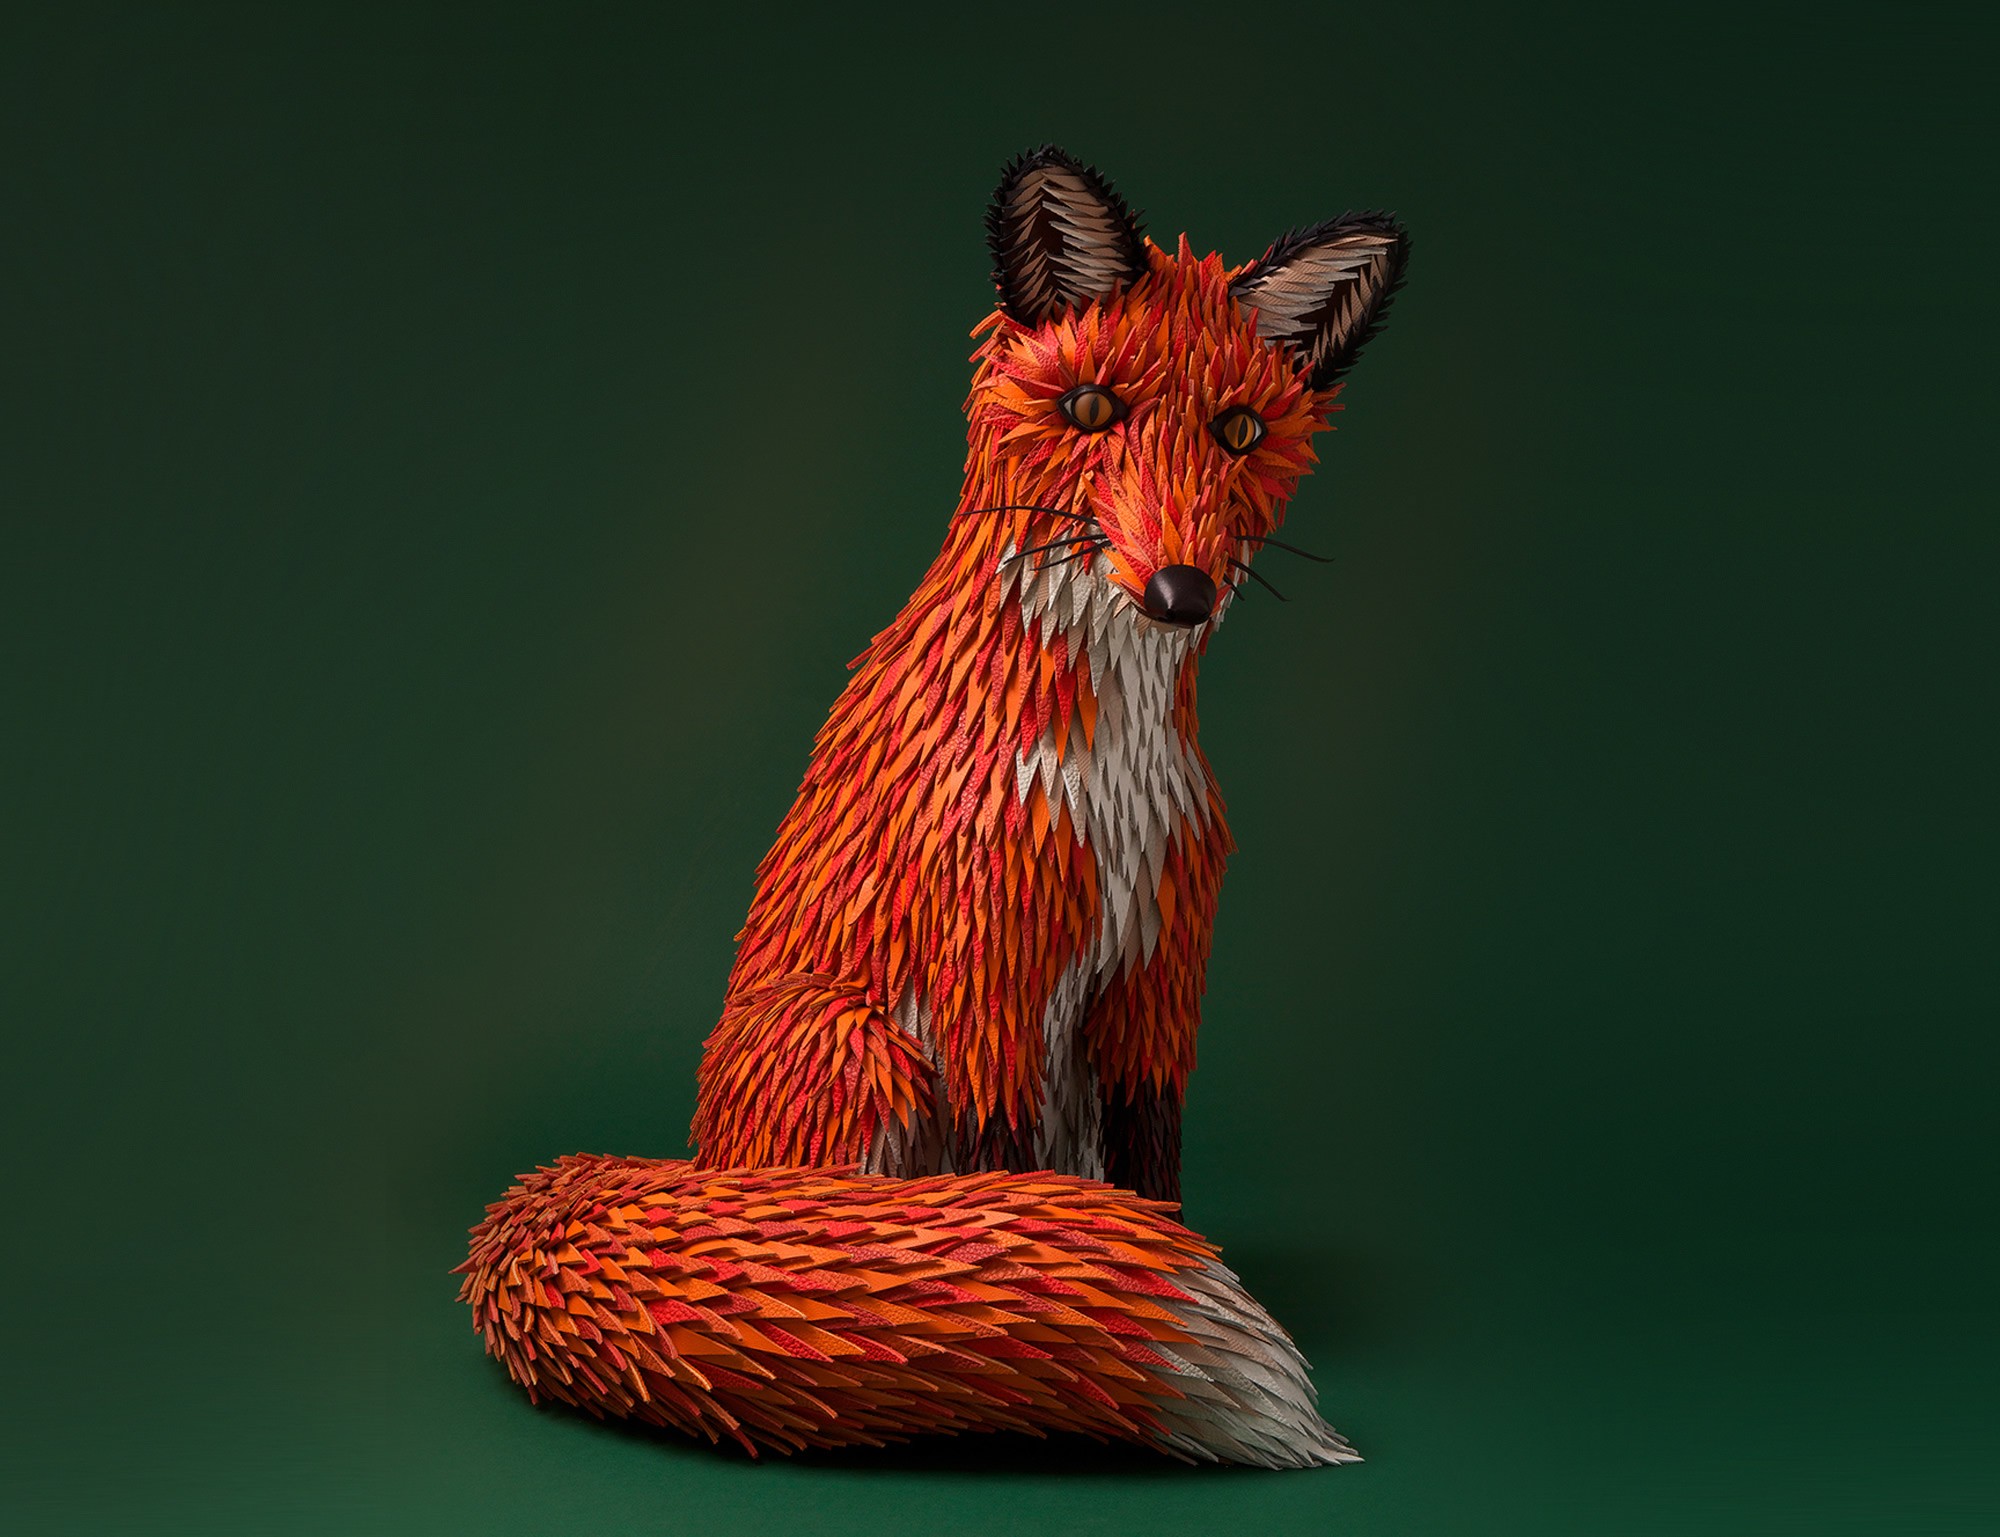 General 2000x1537 animals fox artwork green background CGI leather simple background digital art